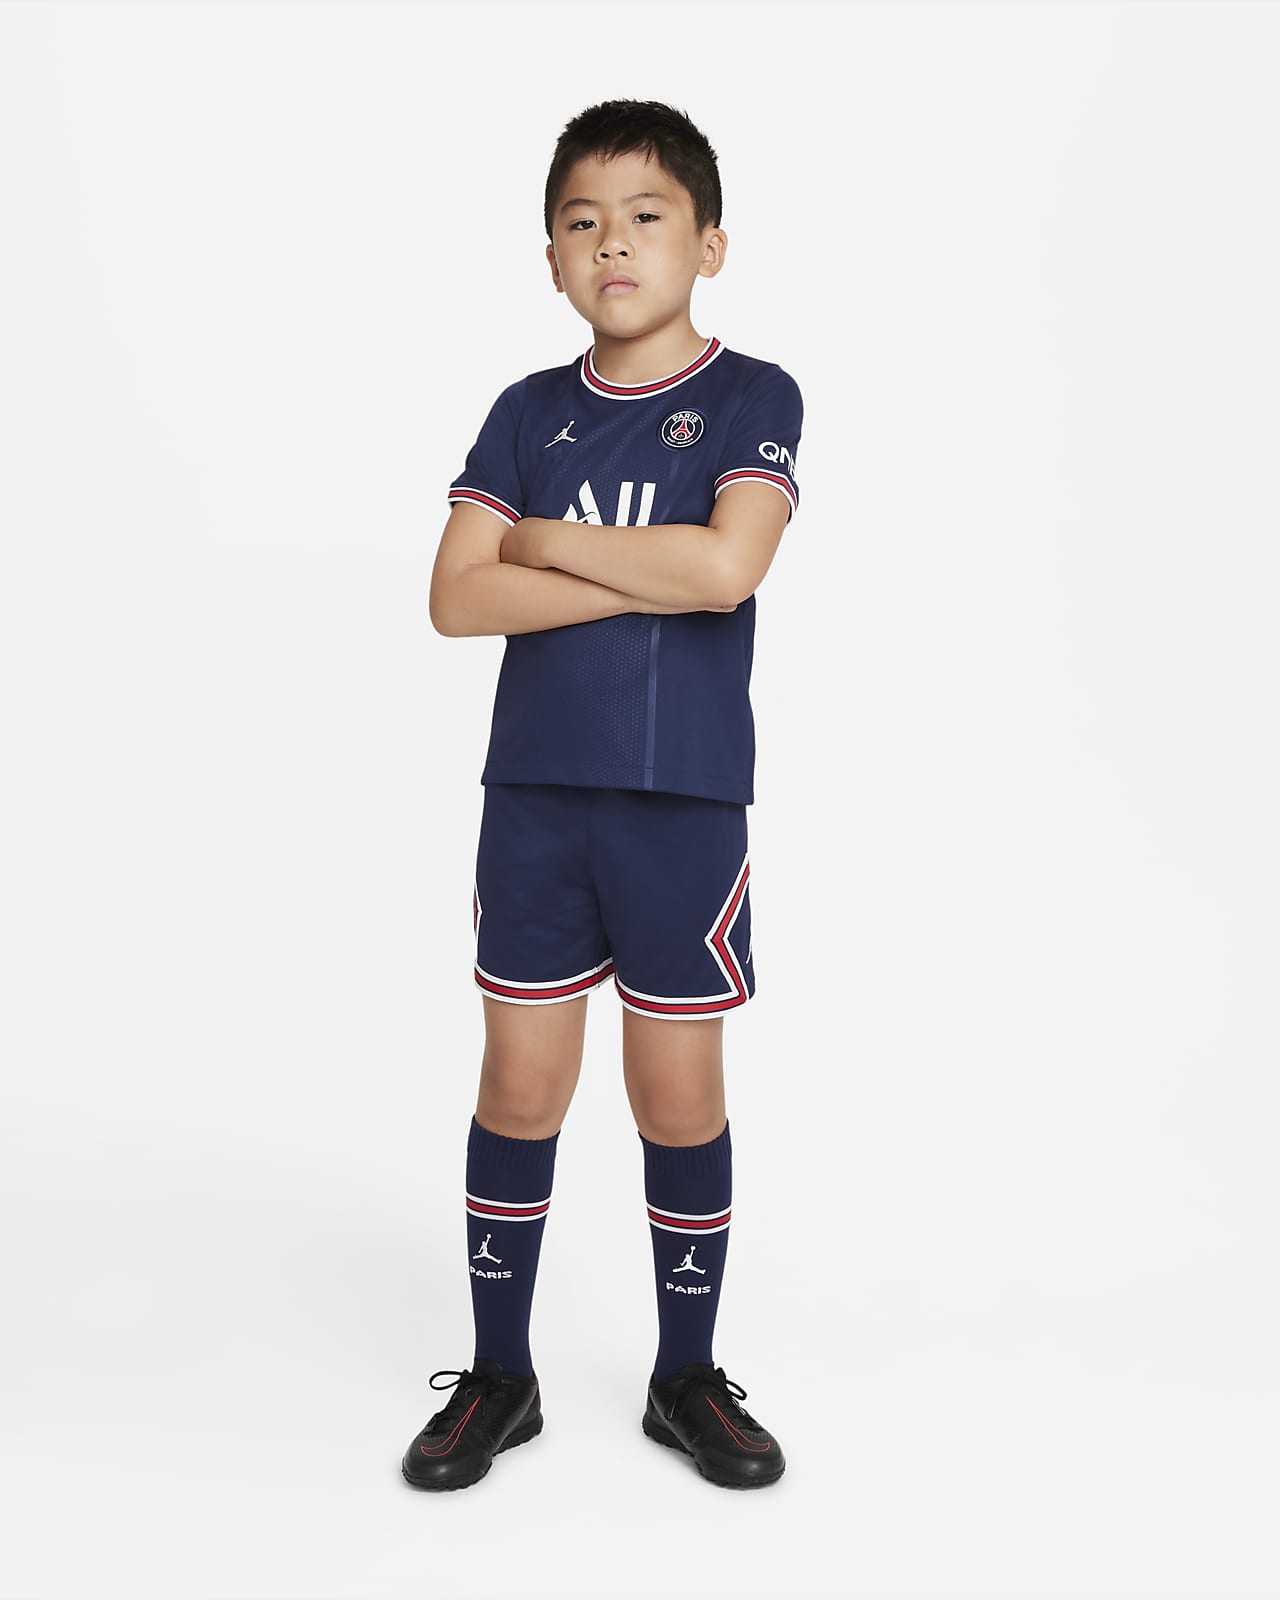 Kids Boys Football Kits Soccer Training Jersey Tops Shorts Socks Outfits UK